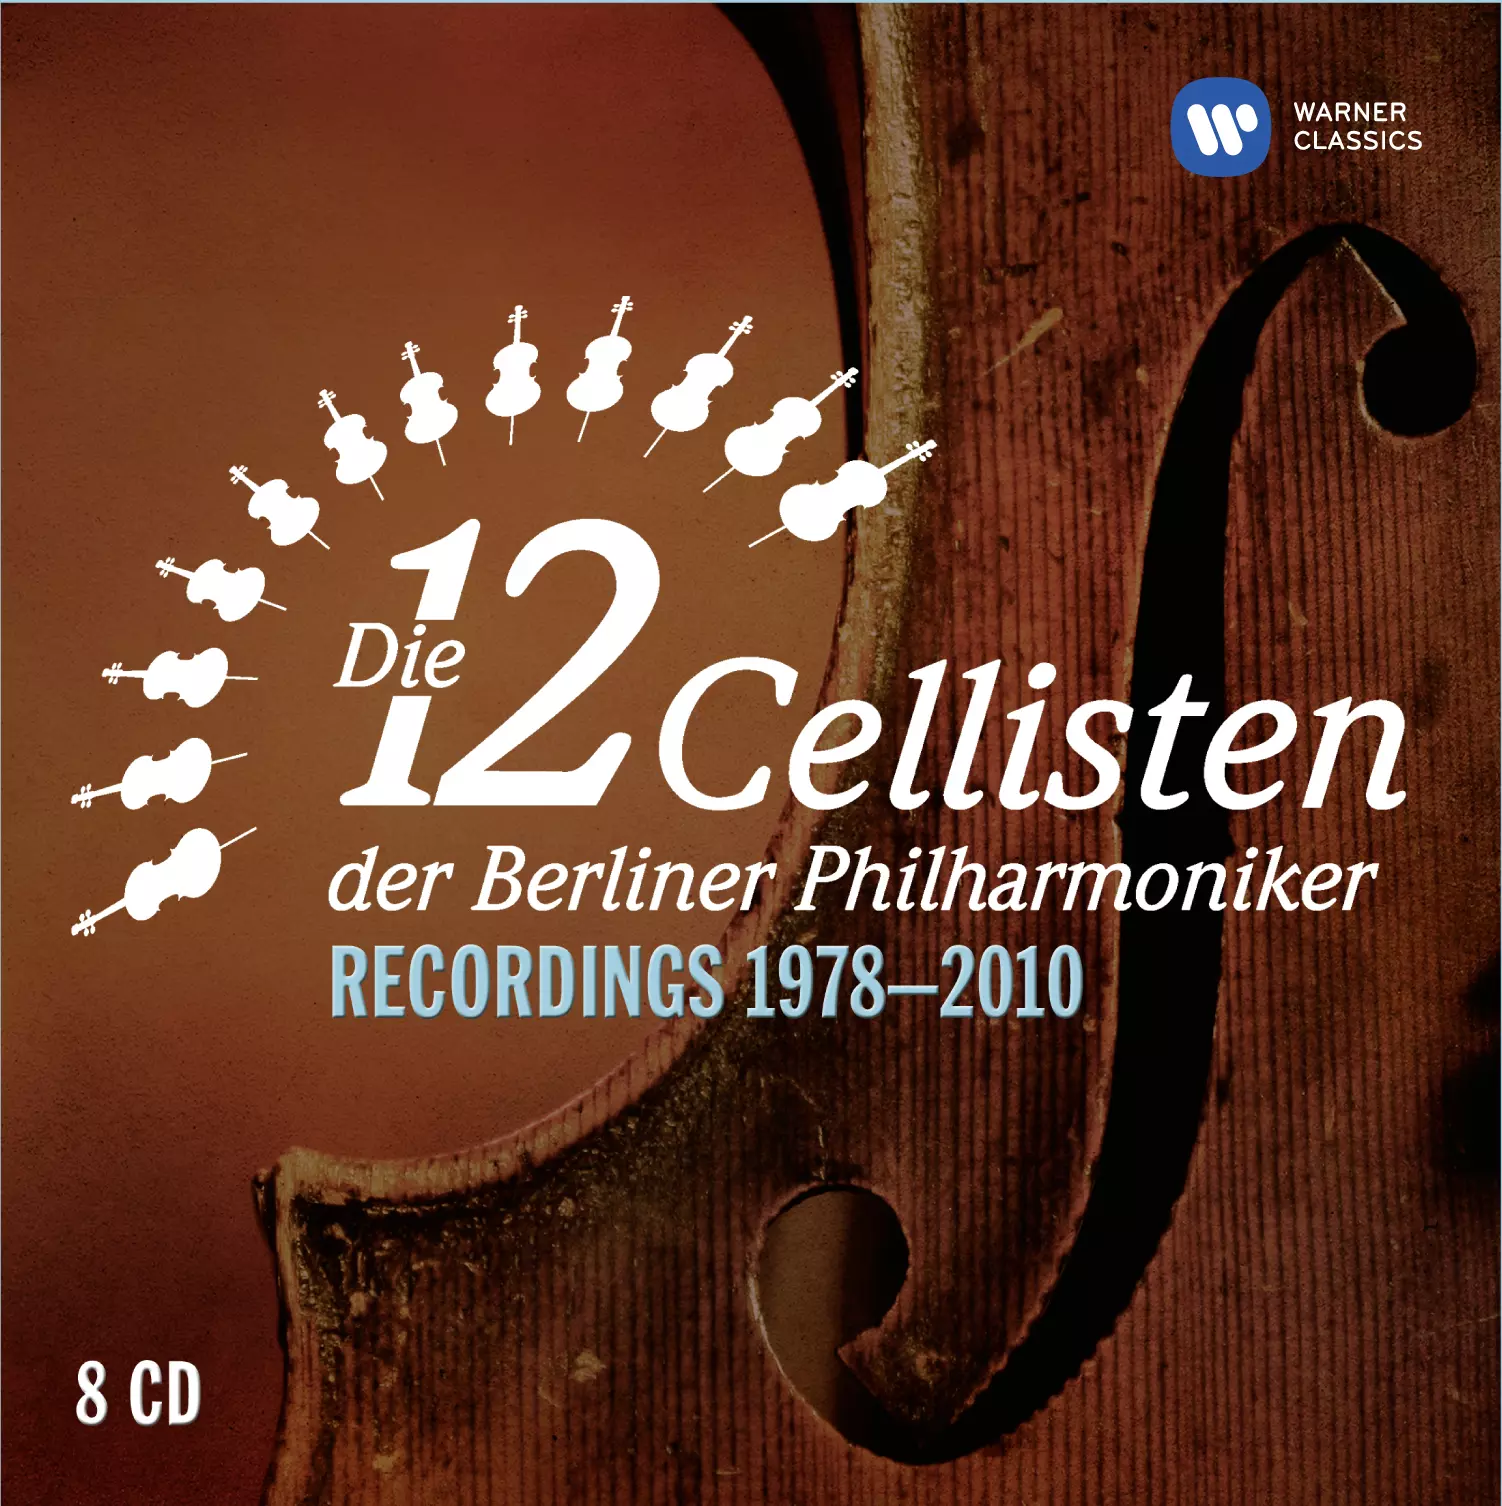 Die 12 Cellisten der Berliner Philharmoniker (Recordings 1978-2010)